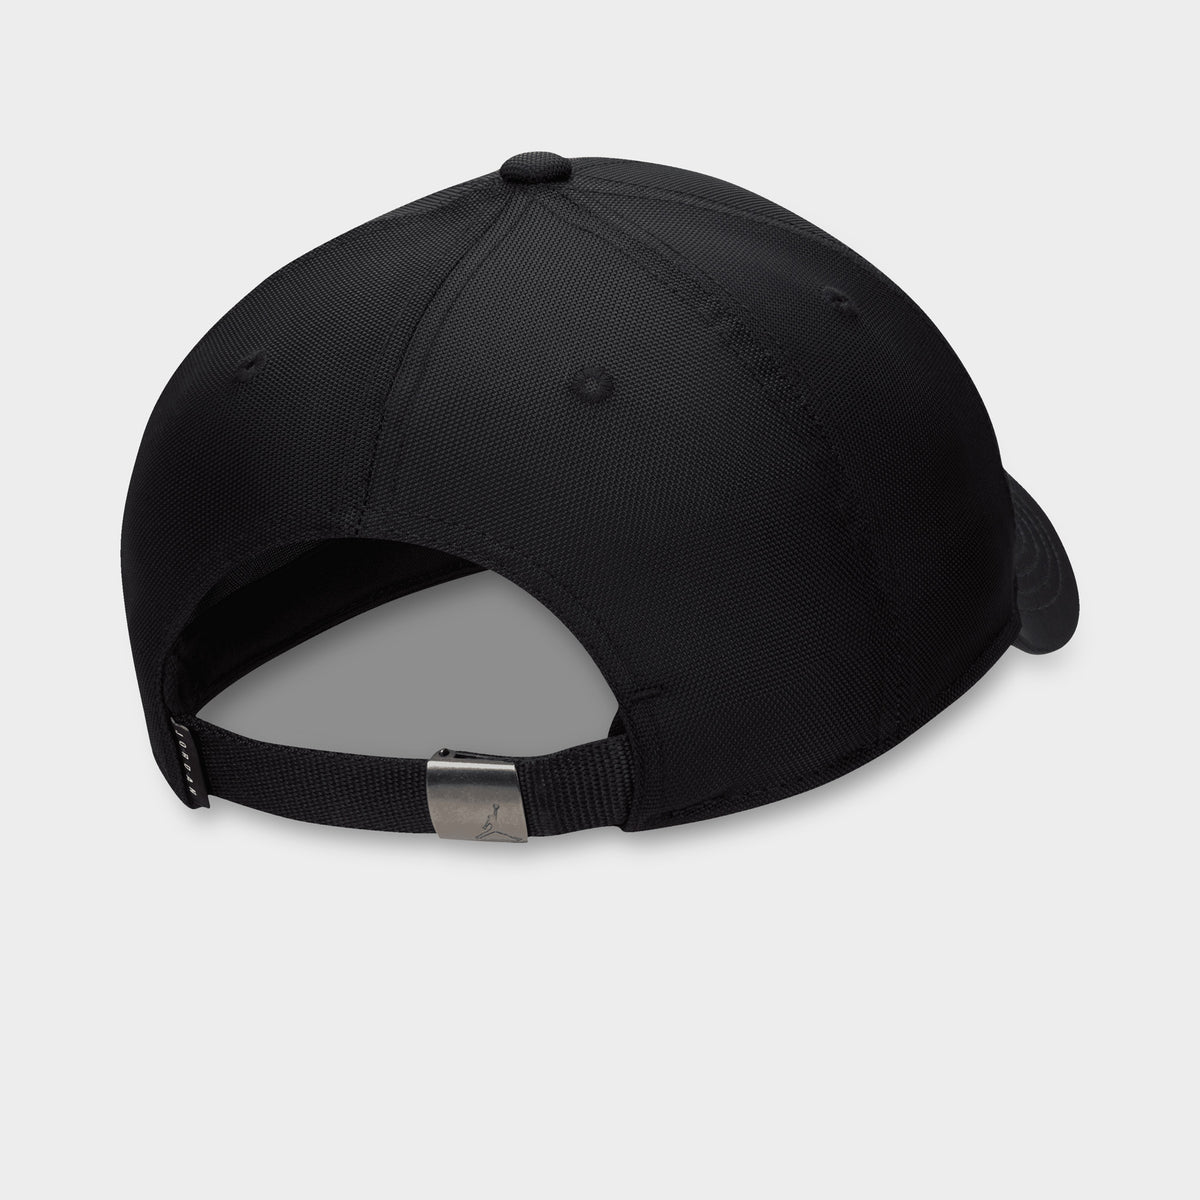 Planet Fitness hat. This black cap is adjustable - Depop